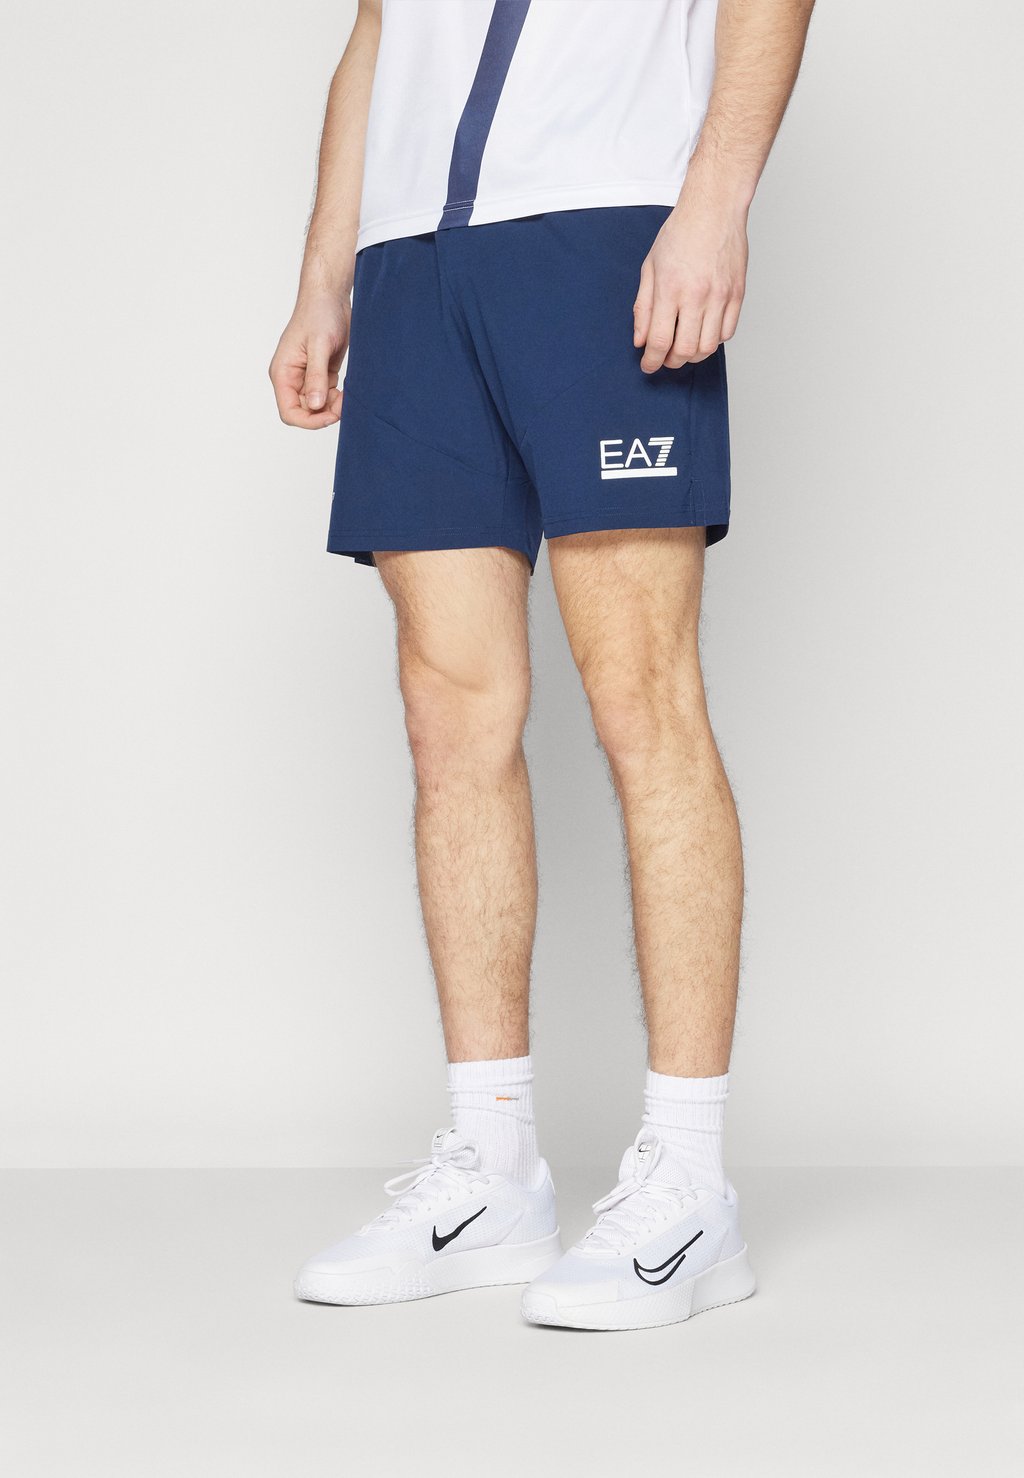 Спортивные шорты TENNIS PRO SHORTS EA7 Emporio Armani, цвет navy blue спортивные шорты shorts tennis players lacoste sport цвет navy blue